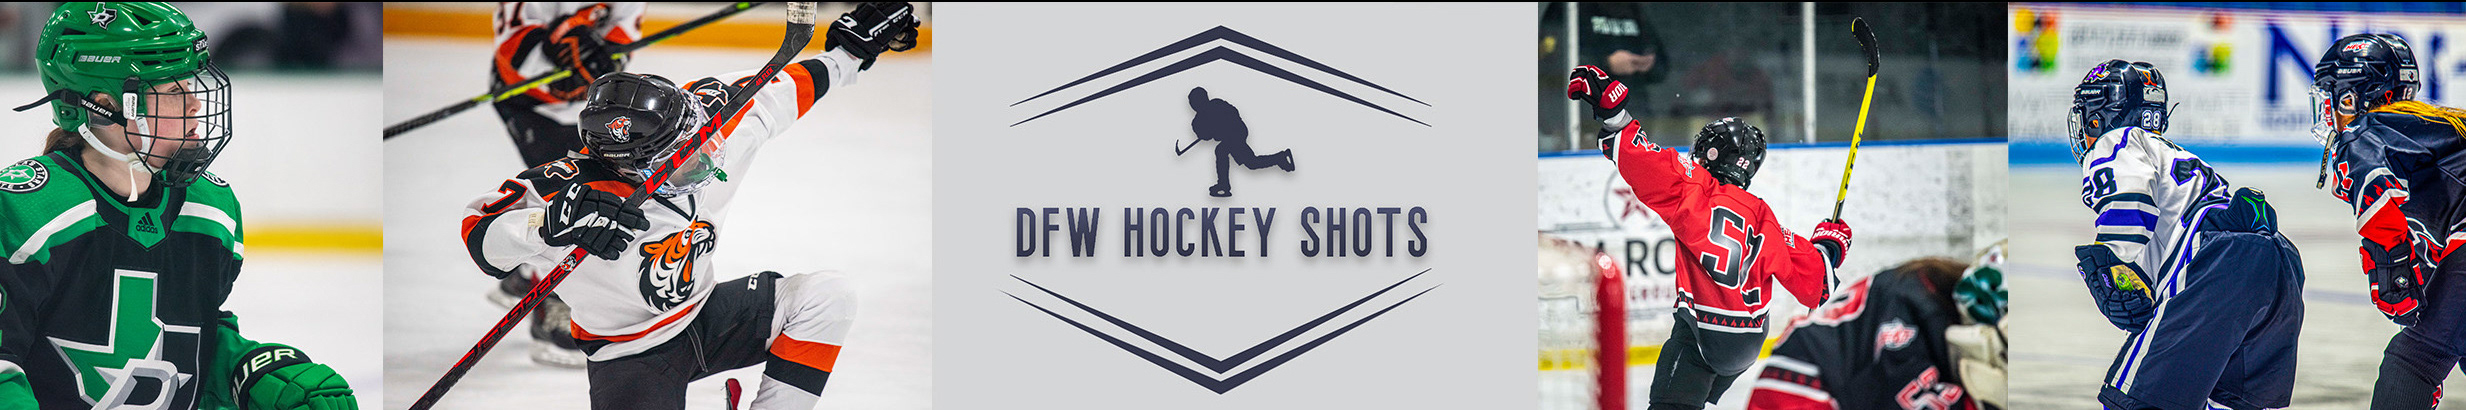 DFW Hockey Shots's profile banner